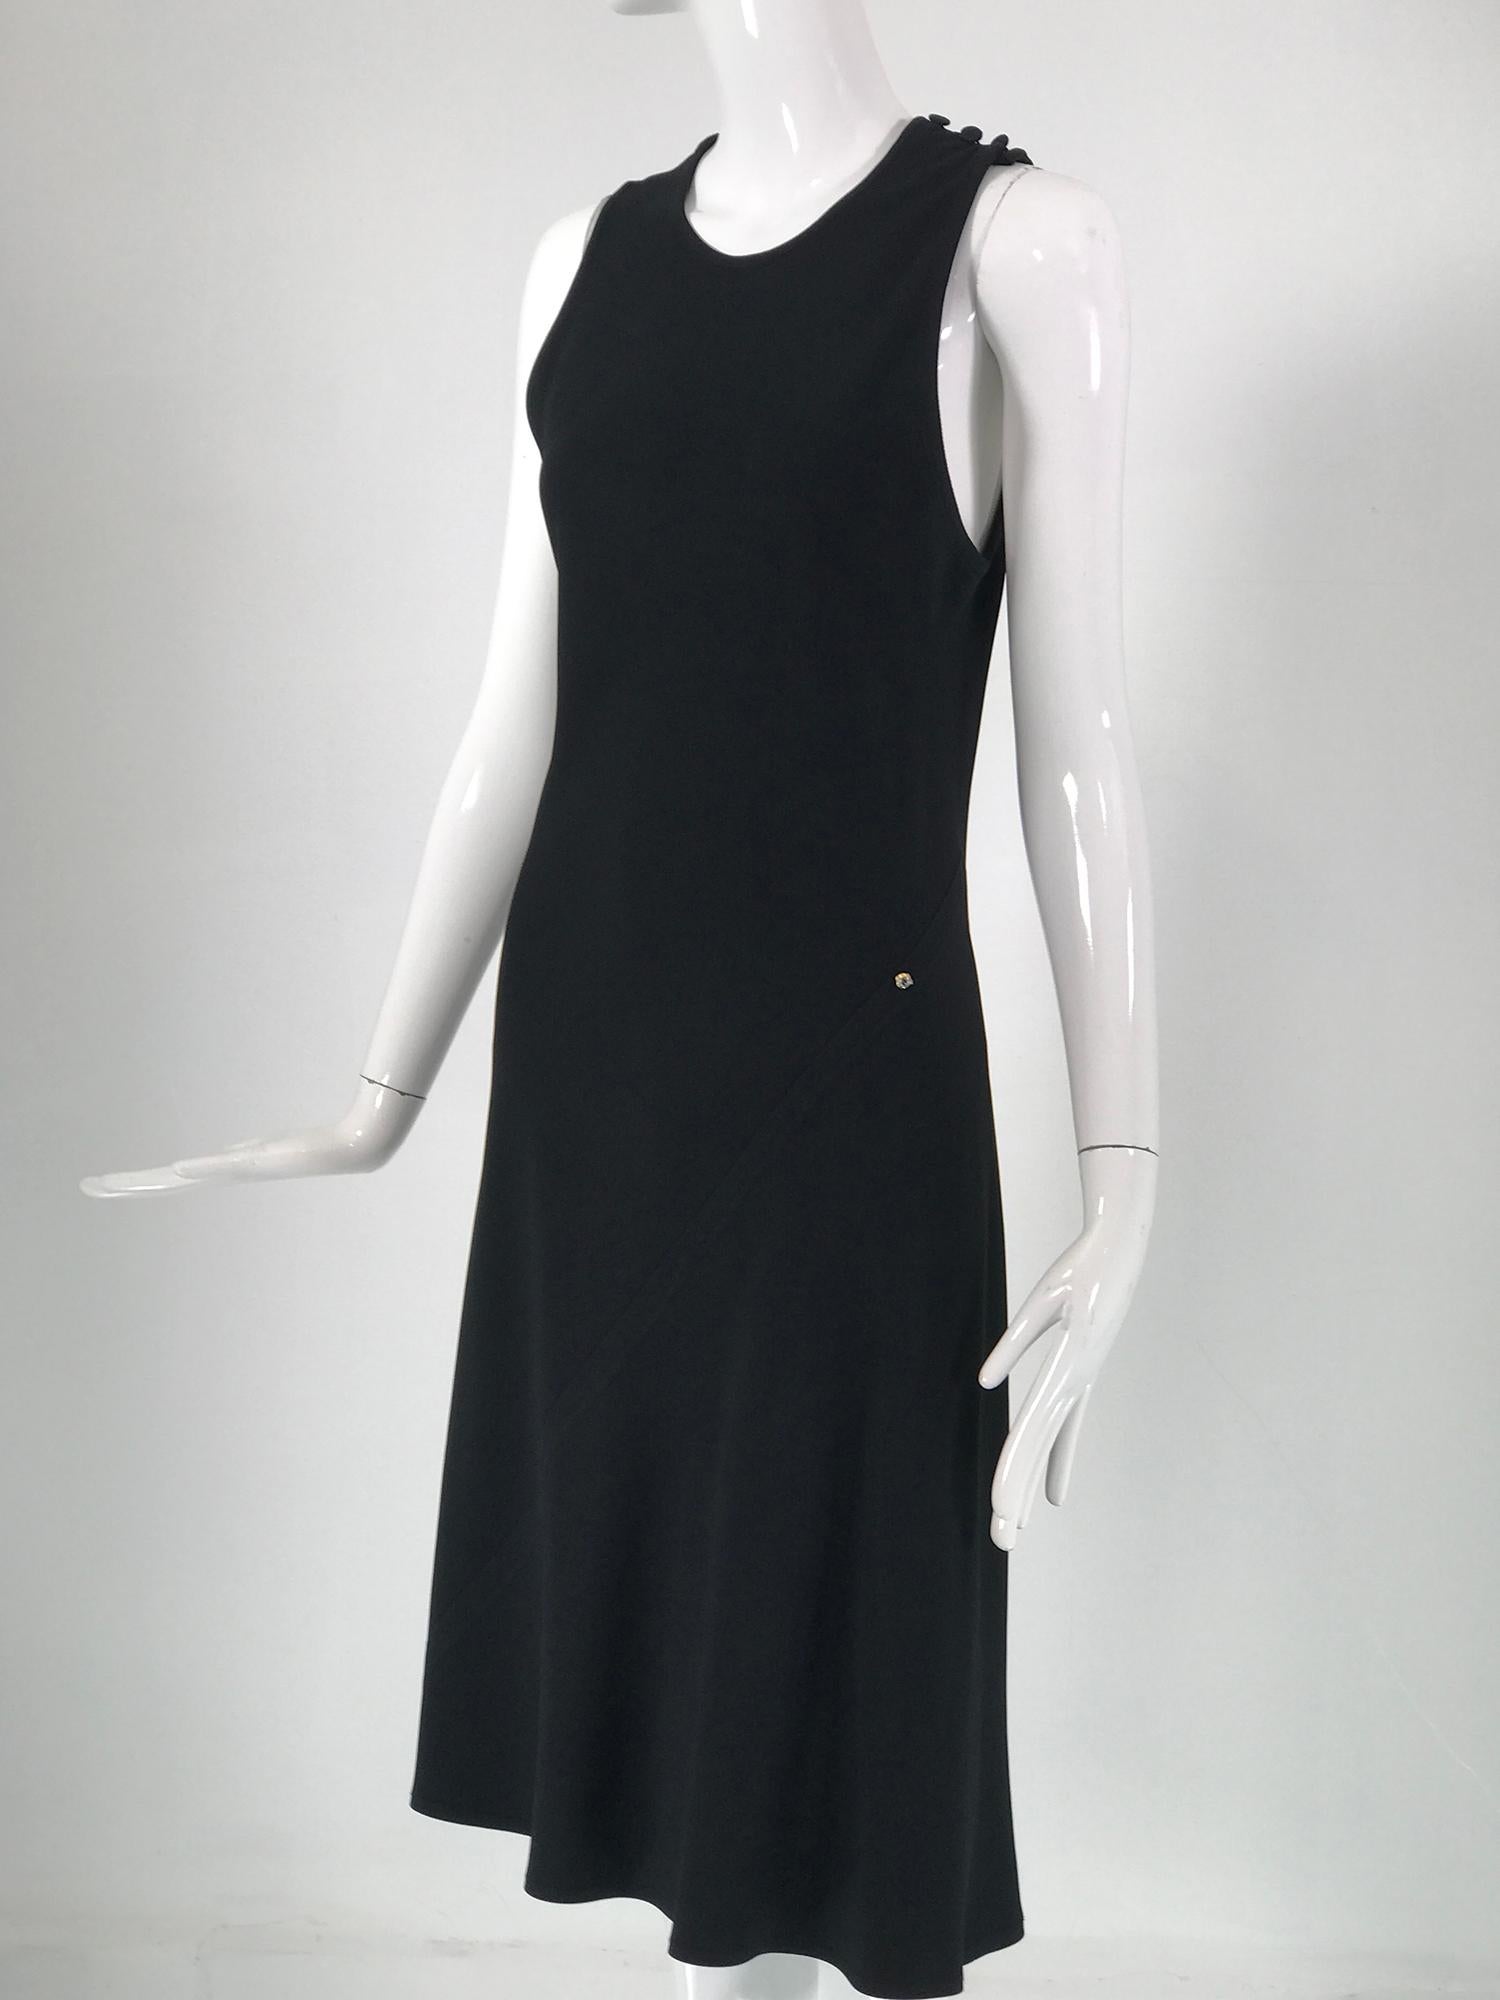 Sonia Rykiel Black Satin Backed Crepe Bias Cut Sleeveless Dress  4